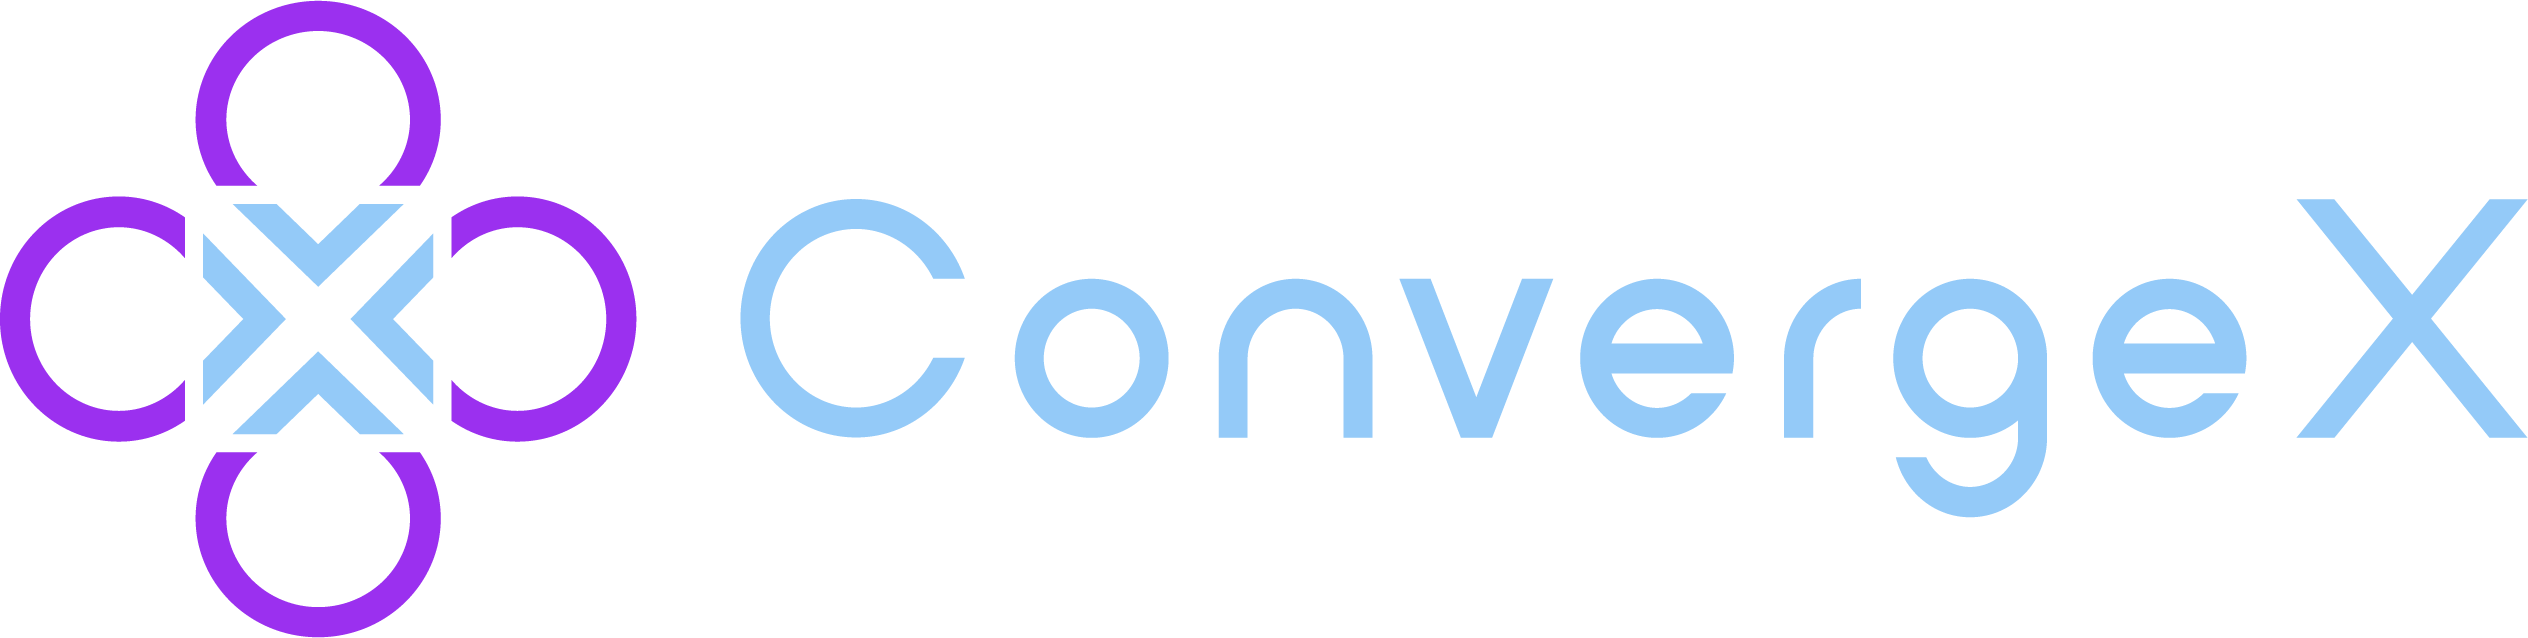 Convergex logo